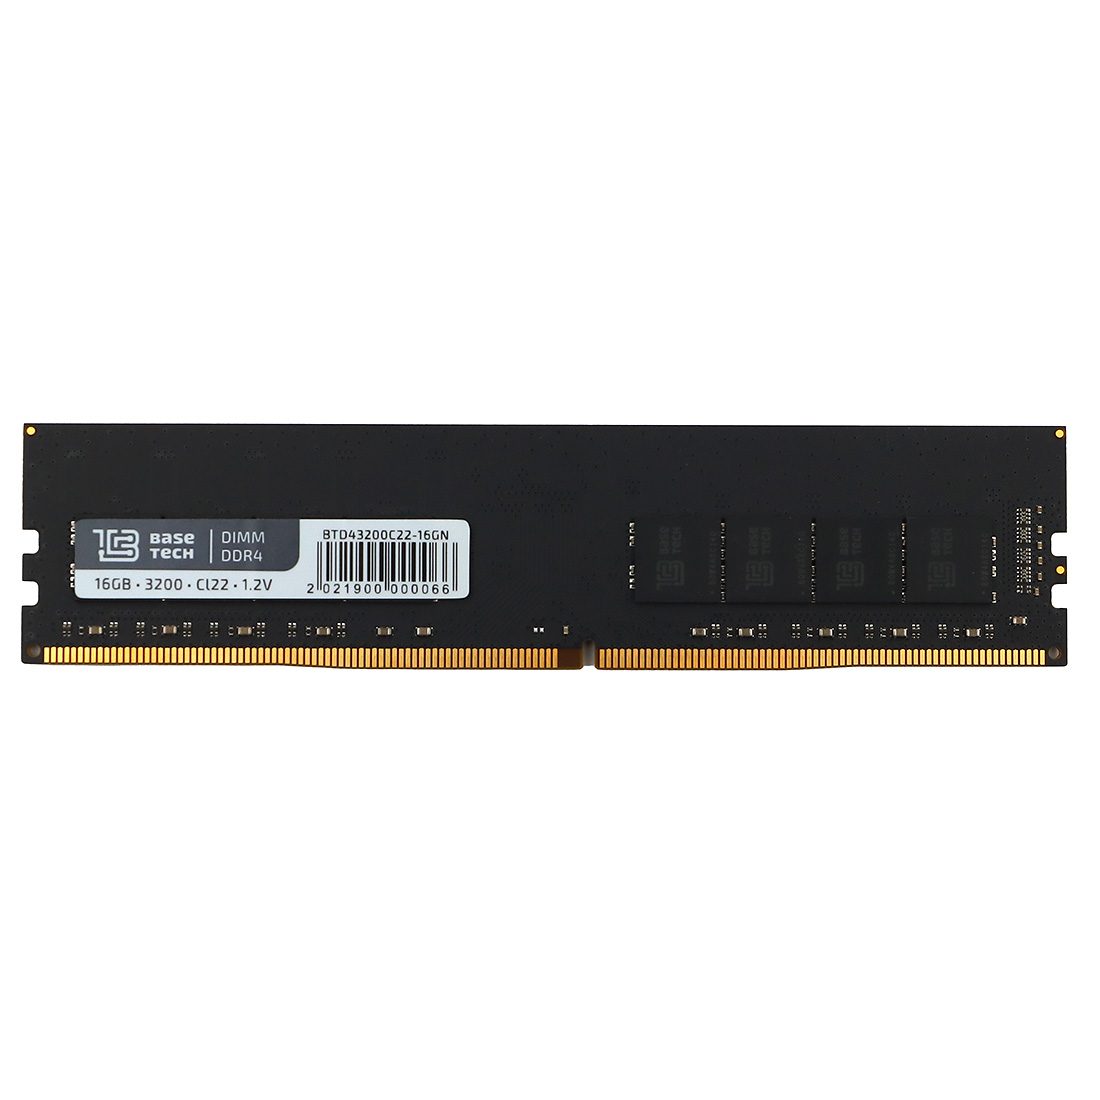 Комплект памяти DDR4 DIMM 32Gb (2x16Gb), 3200MHz, CL22, 1.2V, BaseTech (BTD43200C22-16GN-K2) Bulk (OEM)